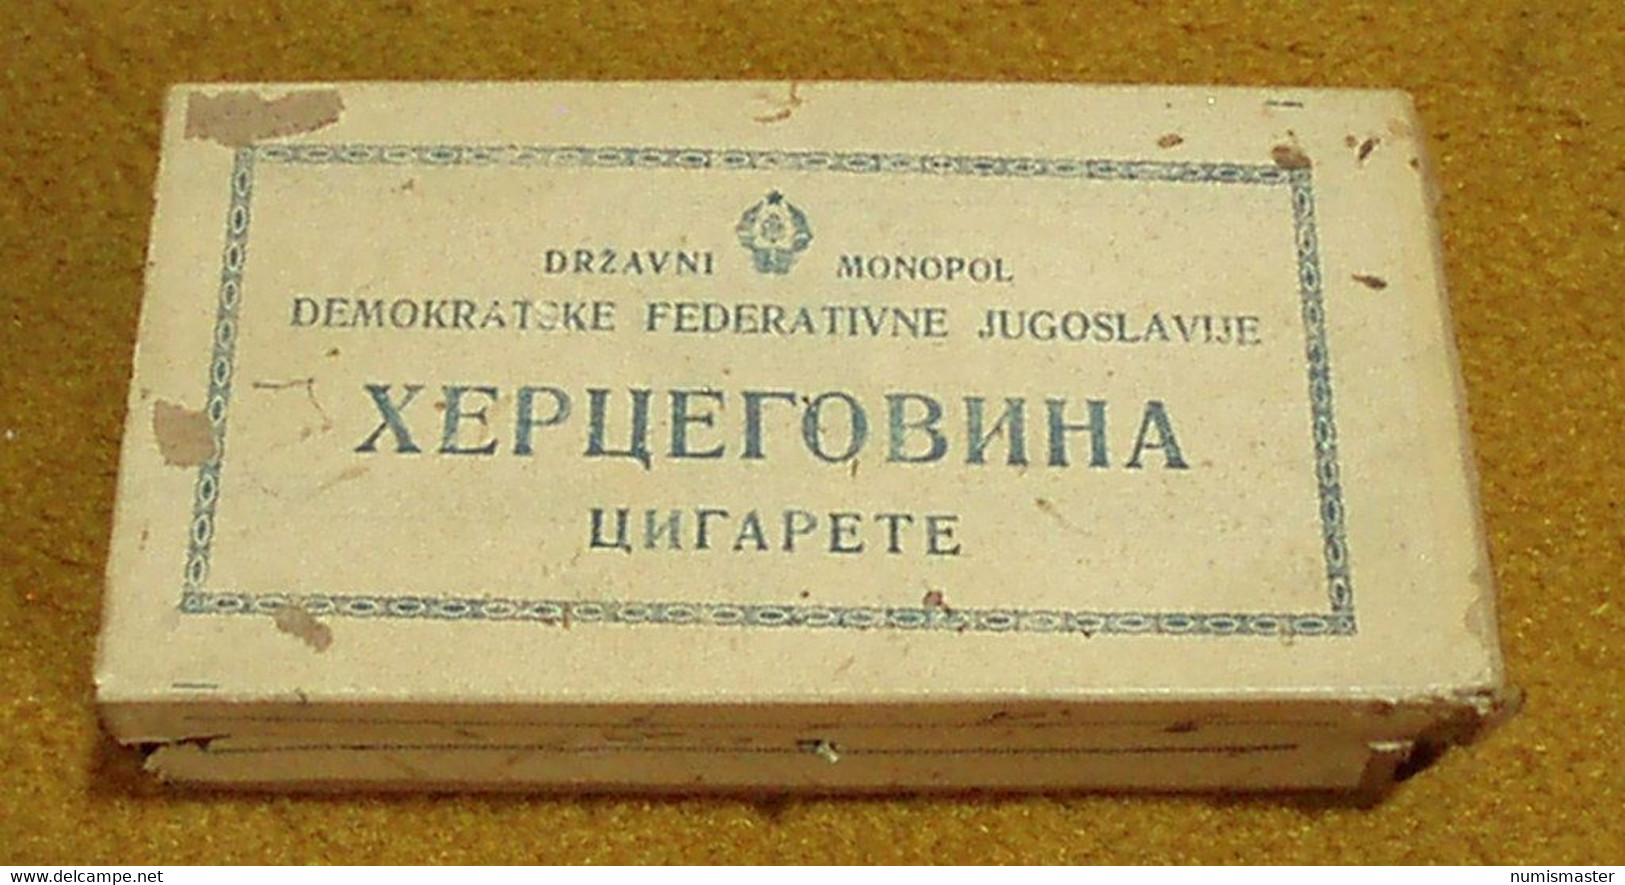 DF YUGOSLAVIA , HERCEGOVINA CIGARETES 100 PIECES EMPTY BOX - Empty Cigarettes Boxes